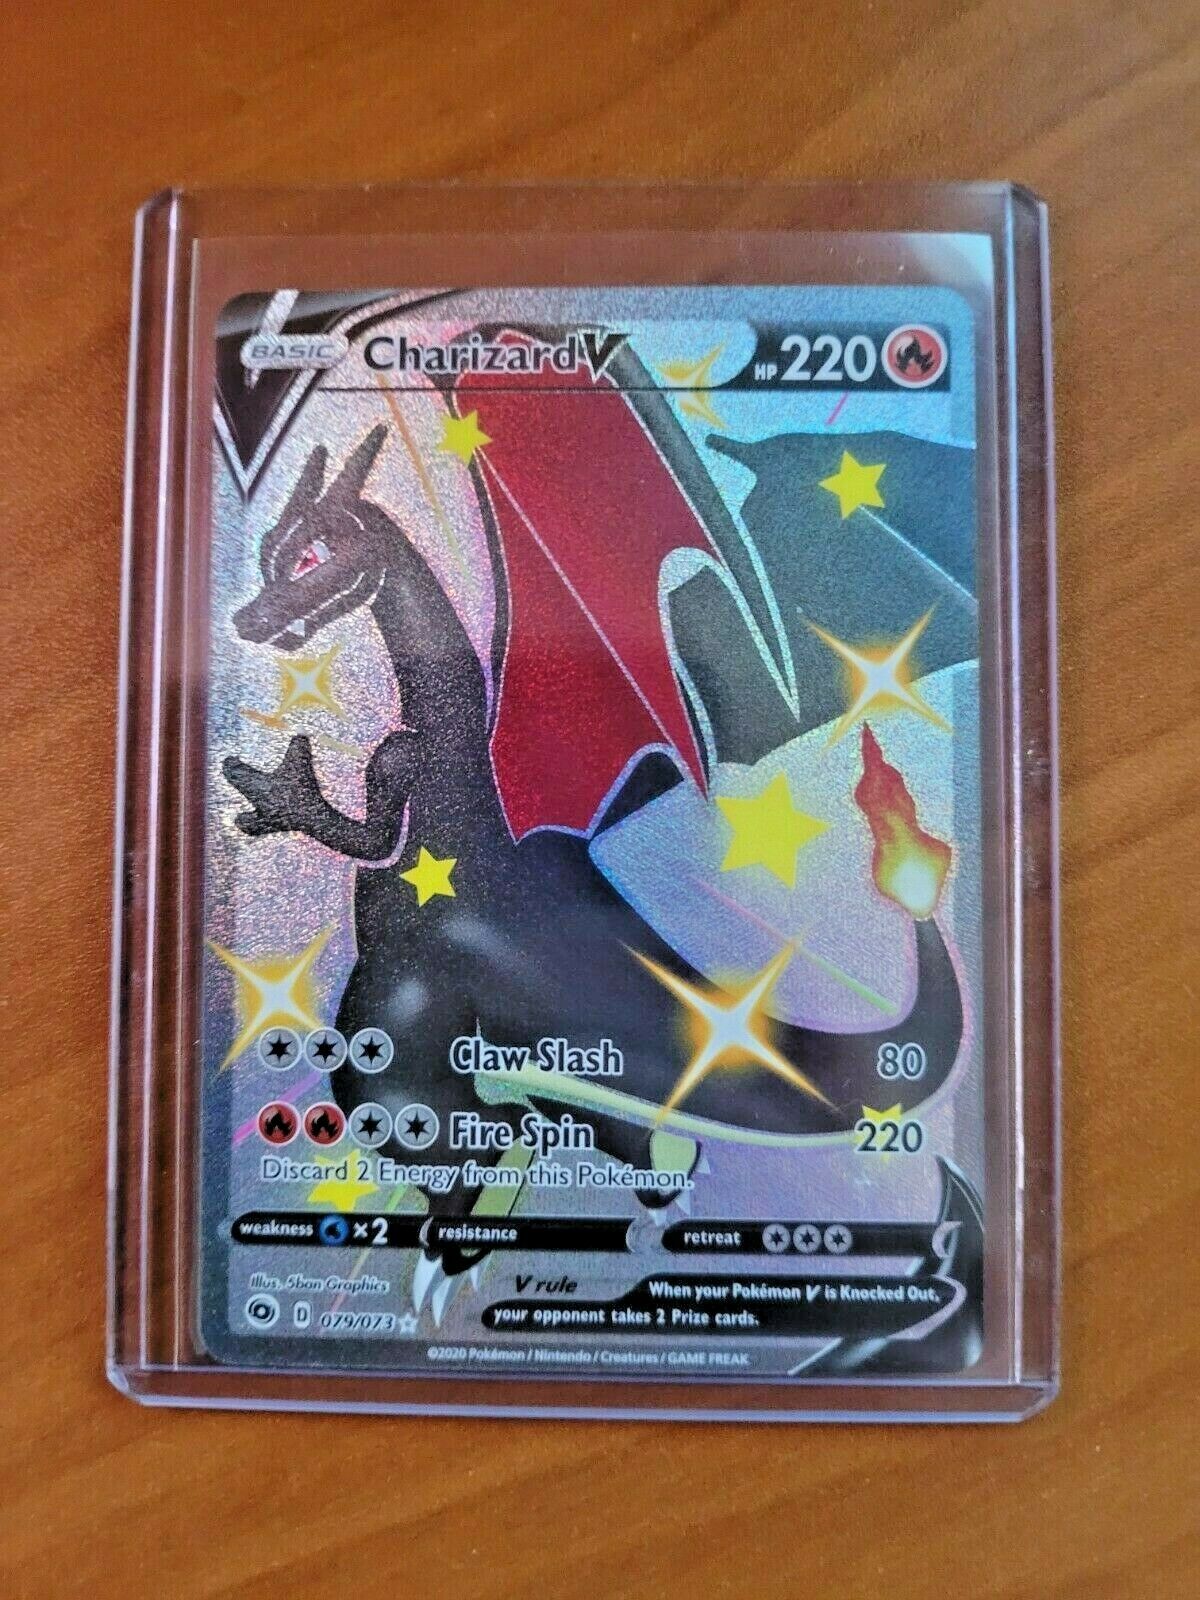 Shiny Charizard V PSA 10 Champions Path 079073 Pokemon Card Possible PSA 10